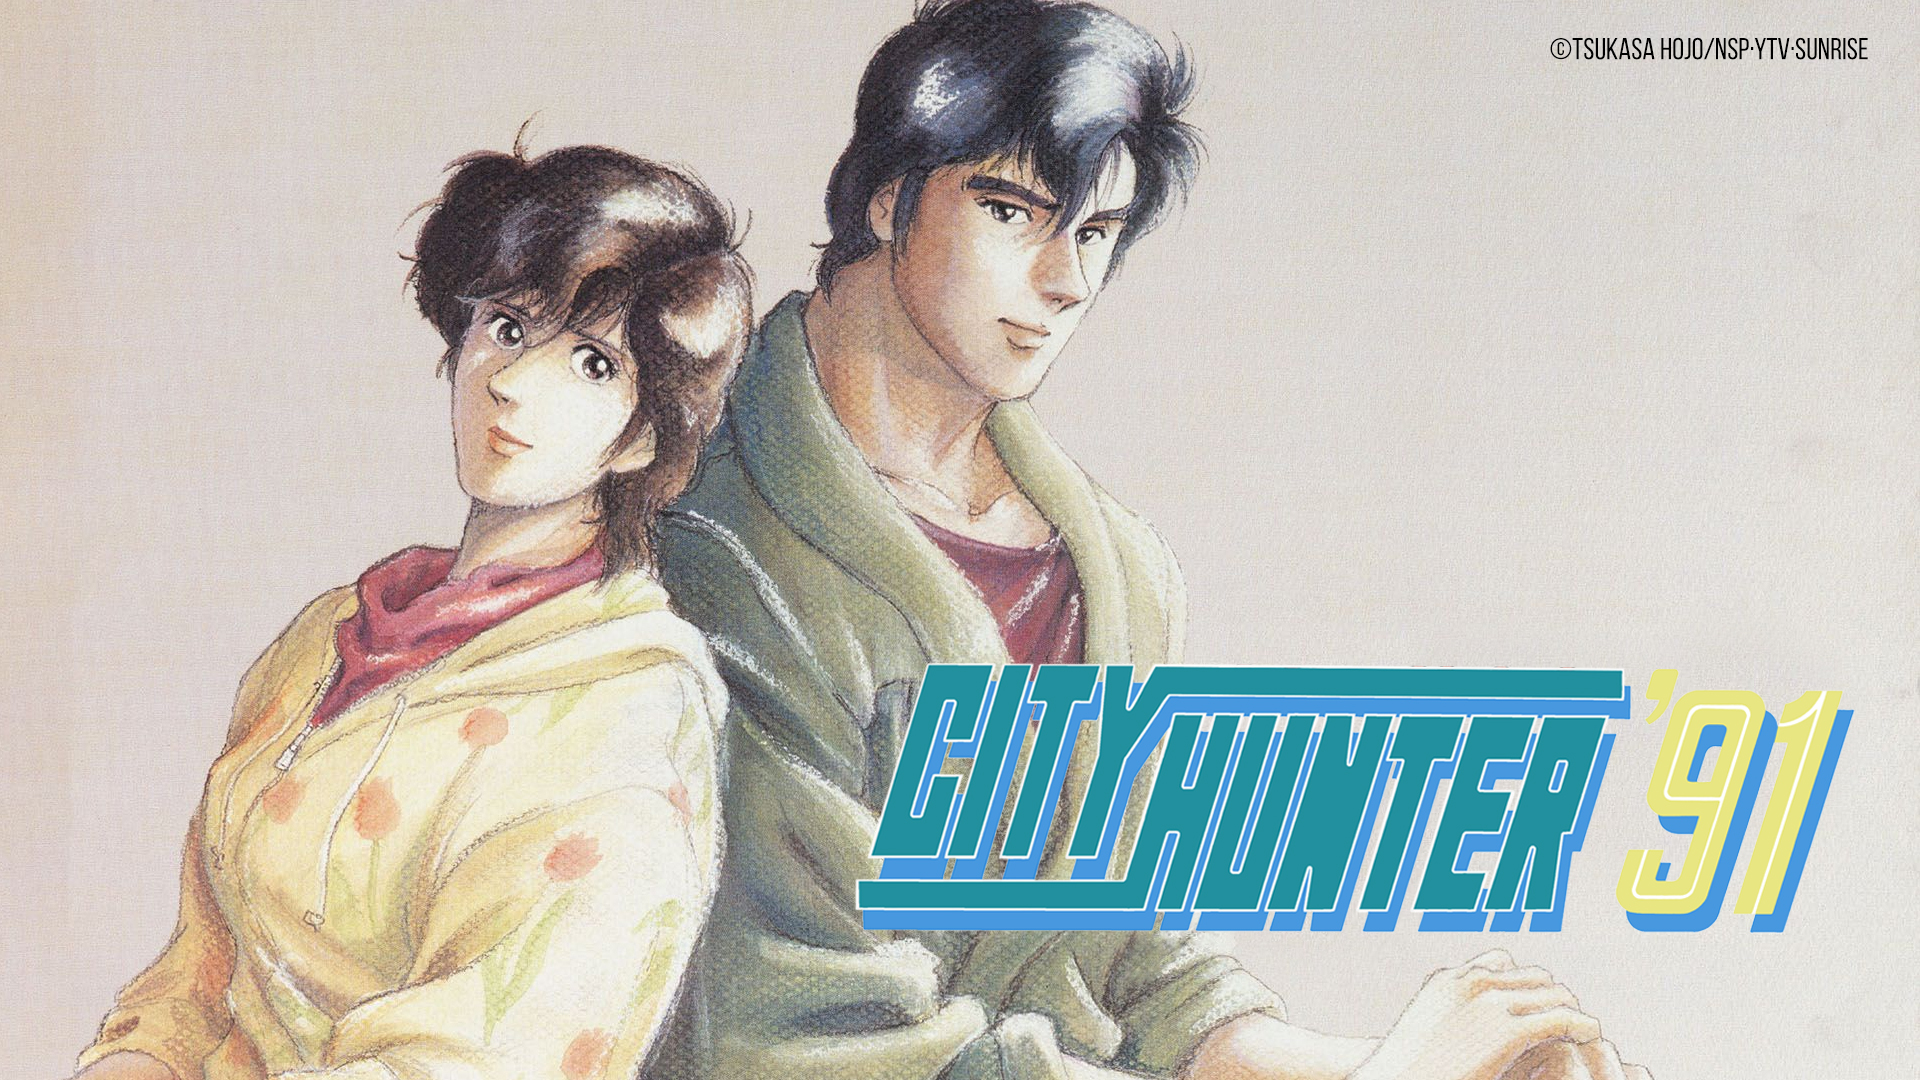 City Hunter 91